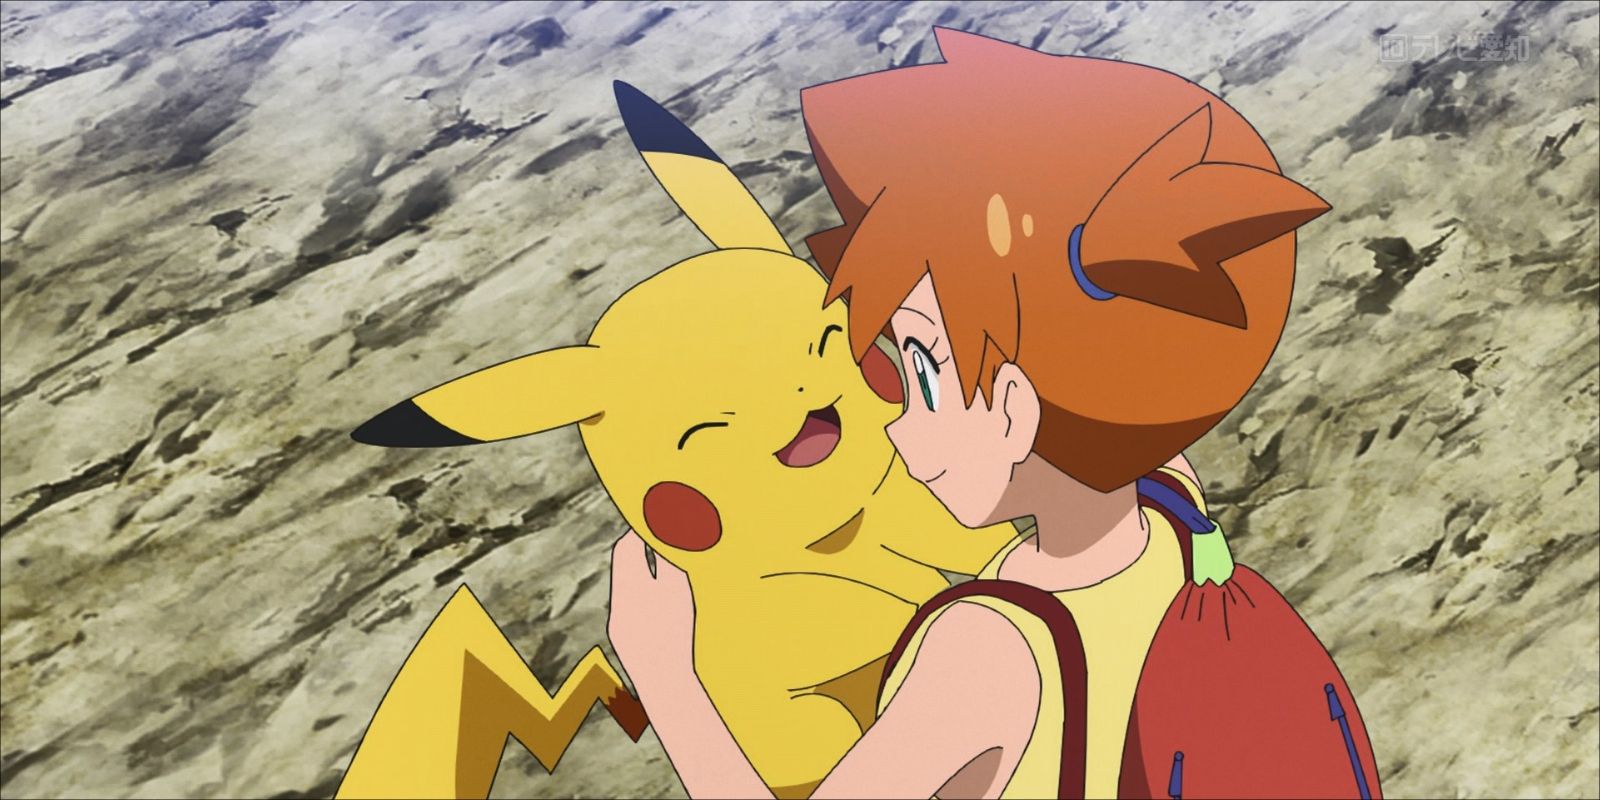 Pokémon Fans Hit With Nostalgia as Misty Returns for Ash's Last Episodes